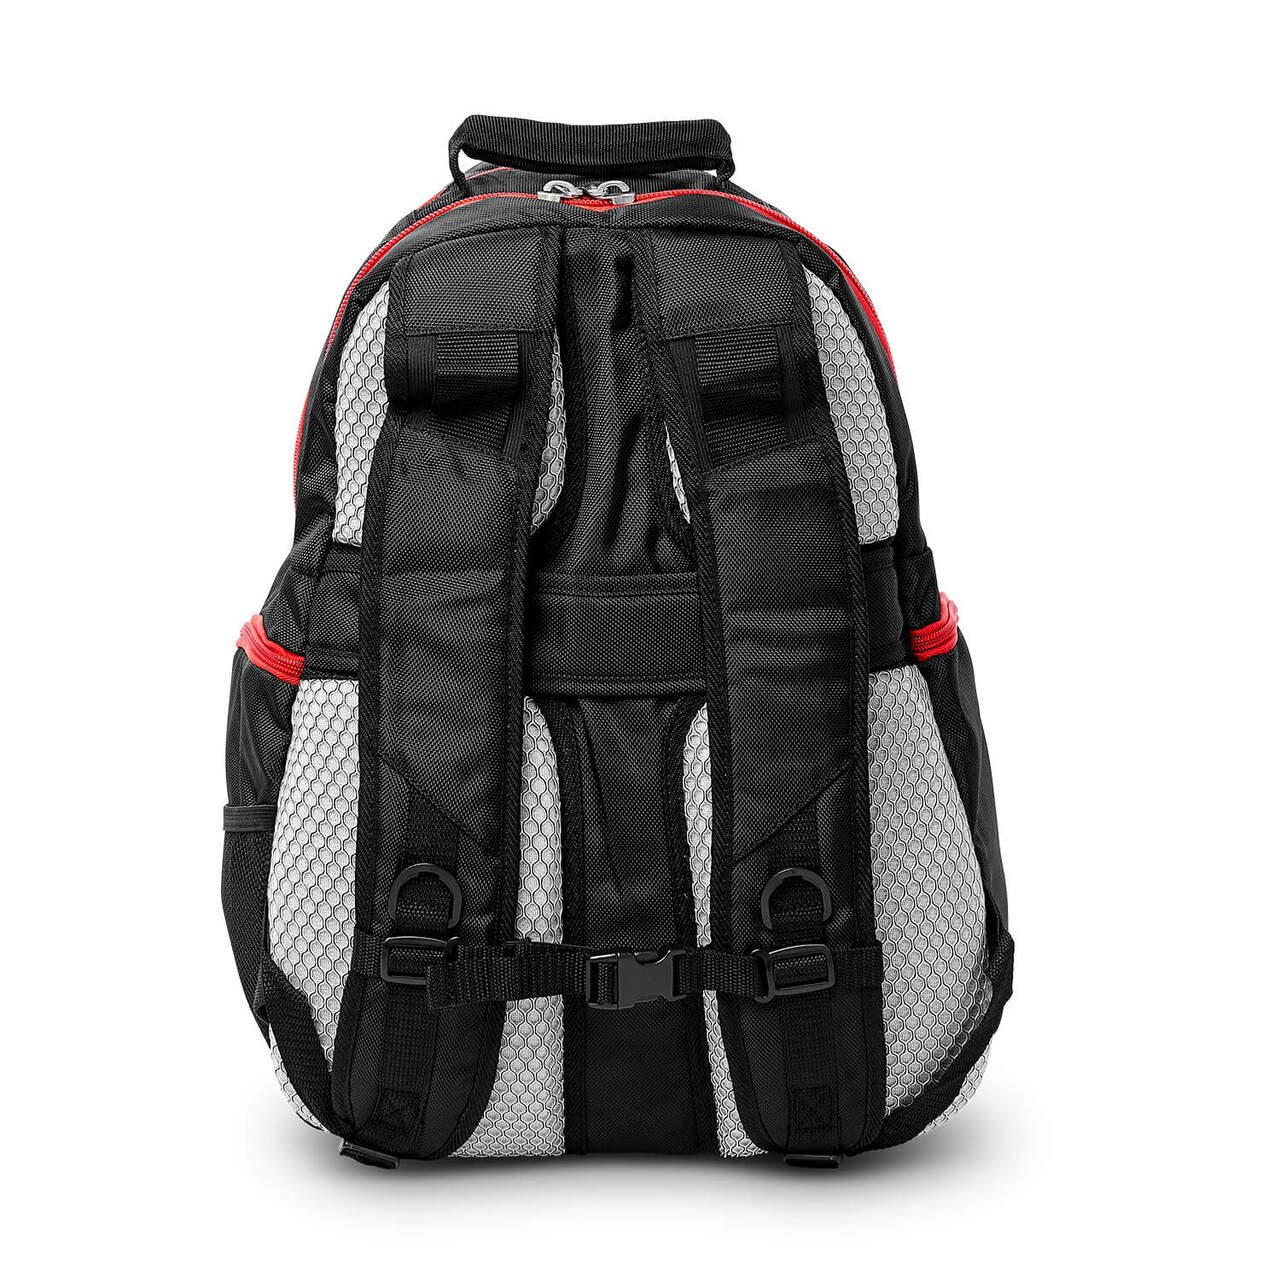 Raiders Backpack | Texas Tech Raiders Laptop Backpack